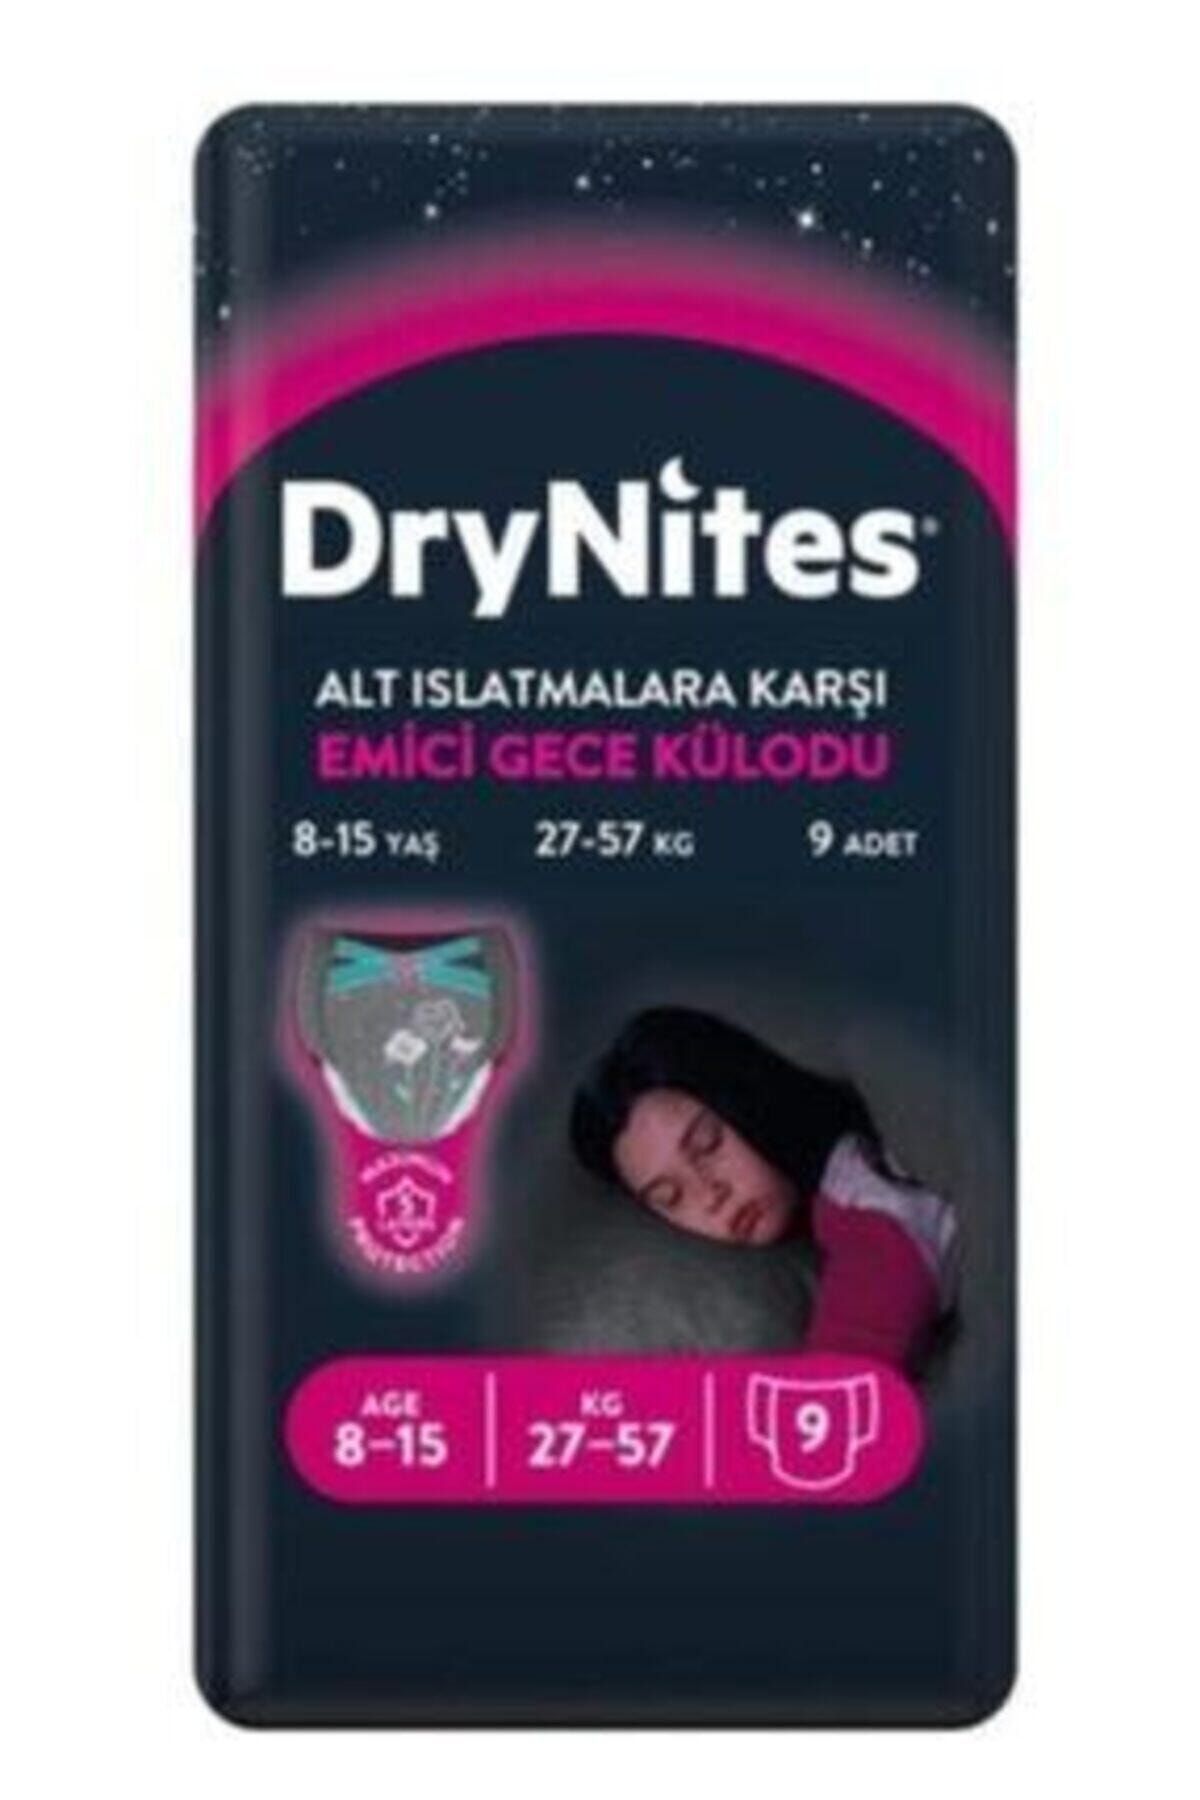 DryNites Huggies Kız Emici Gece Külodu 8-15 Yaş 27-57kg 9 Lu Paket